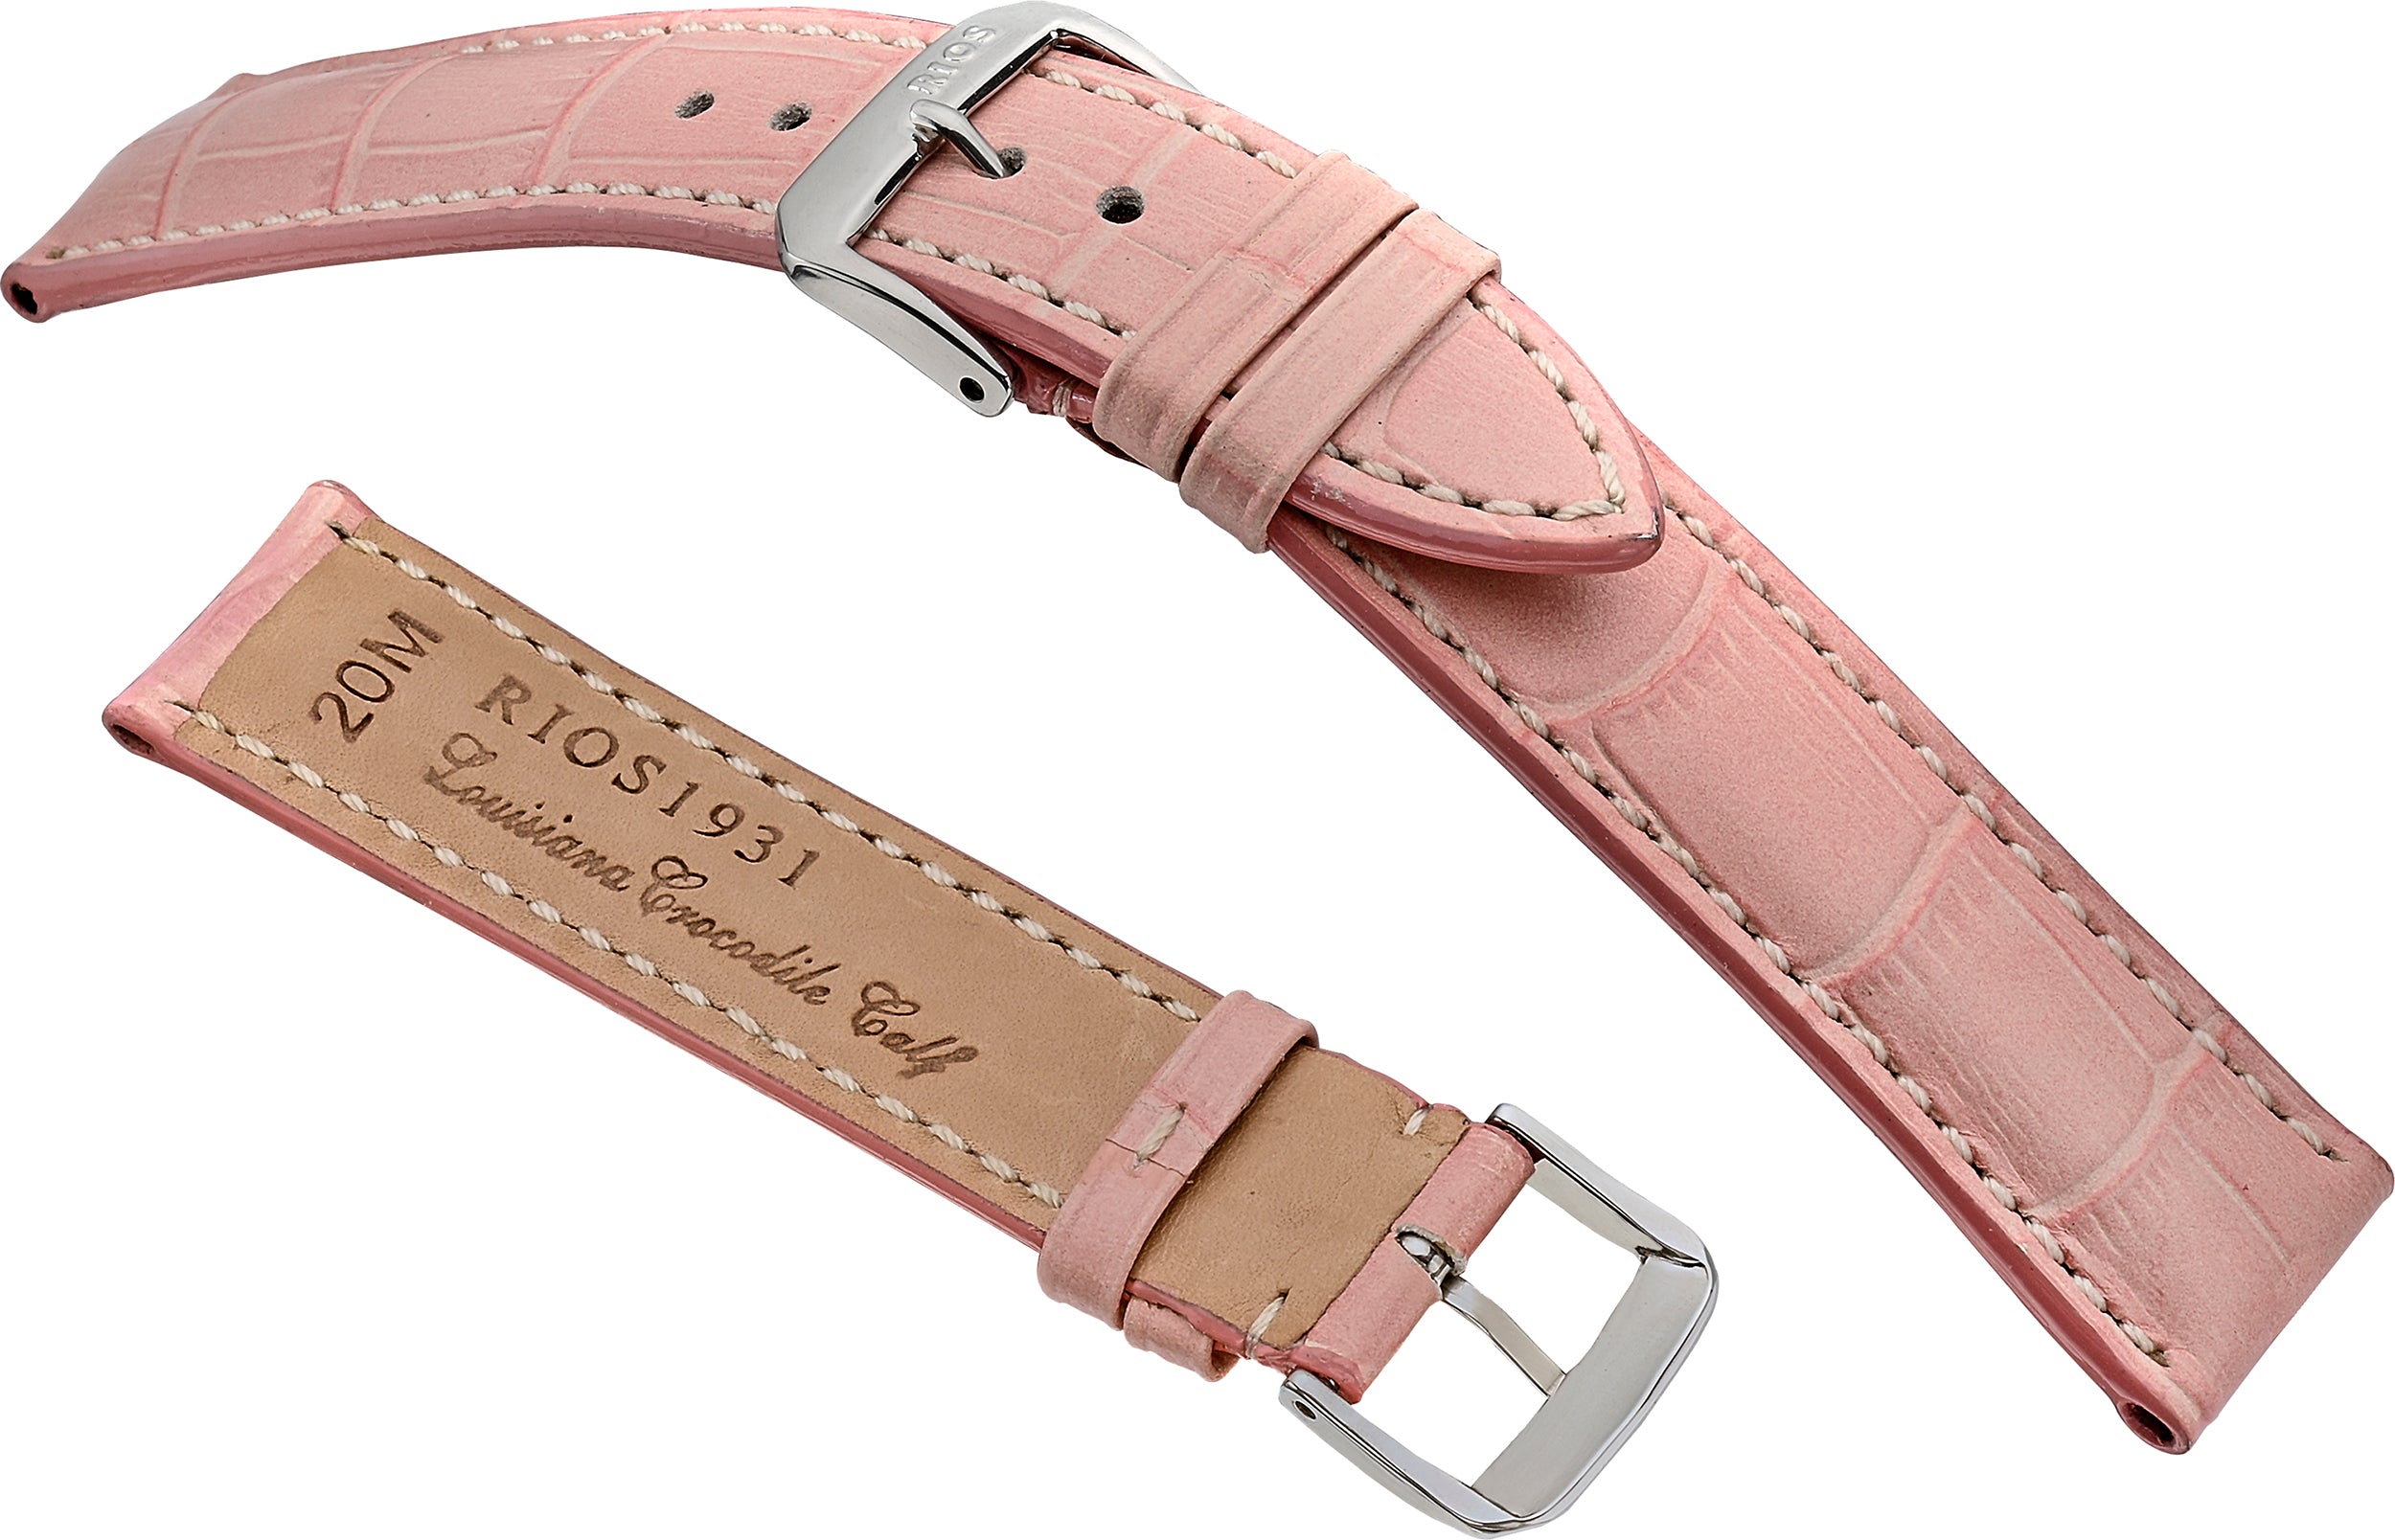 R51 NEW ORLEANS watch strap